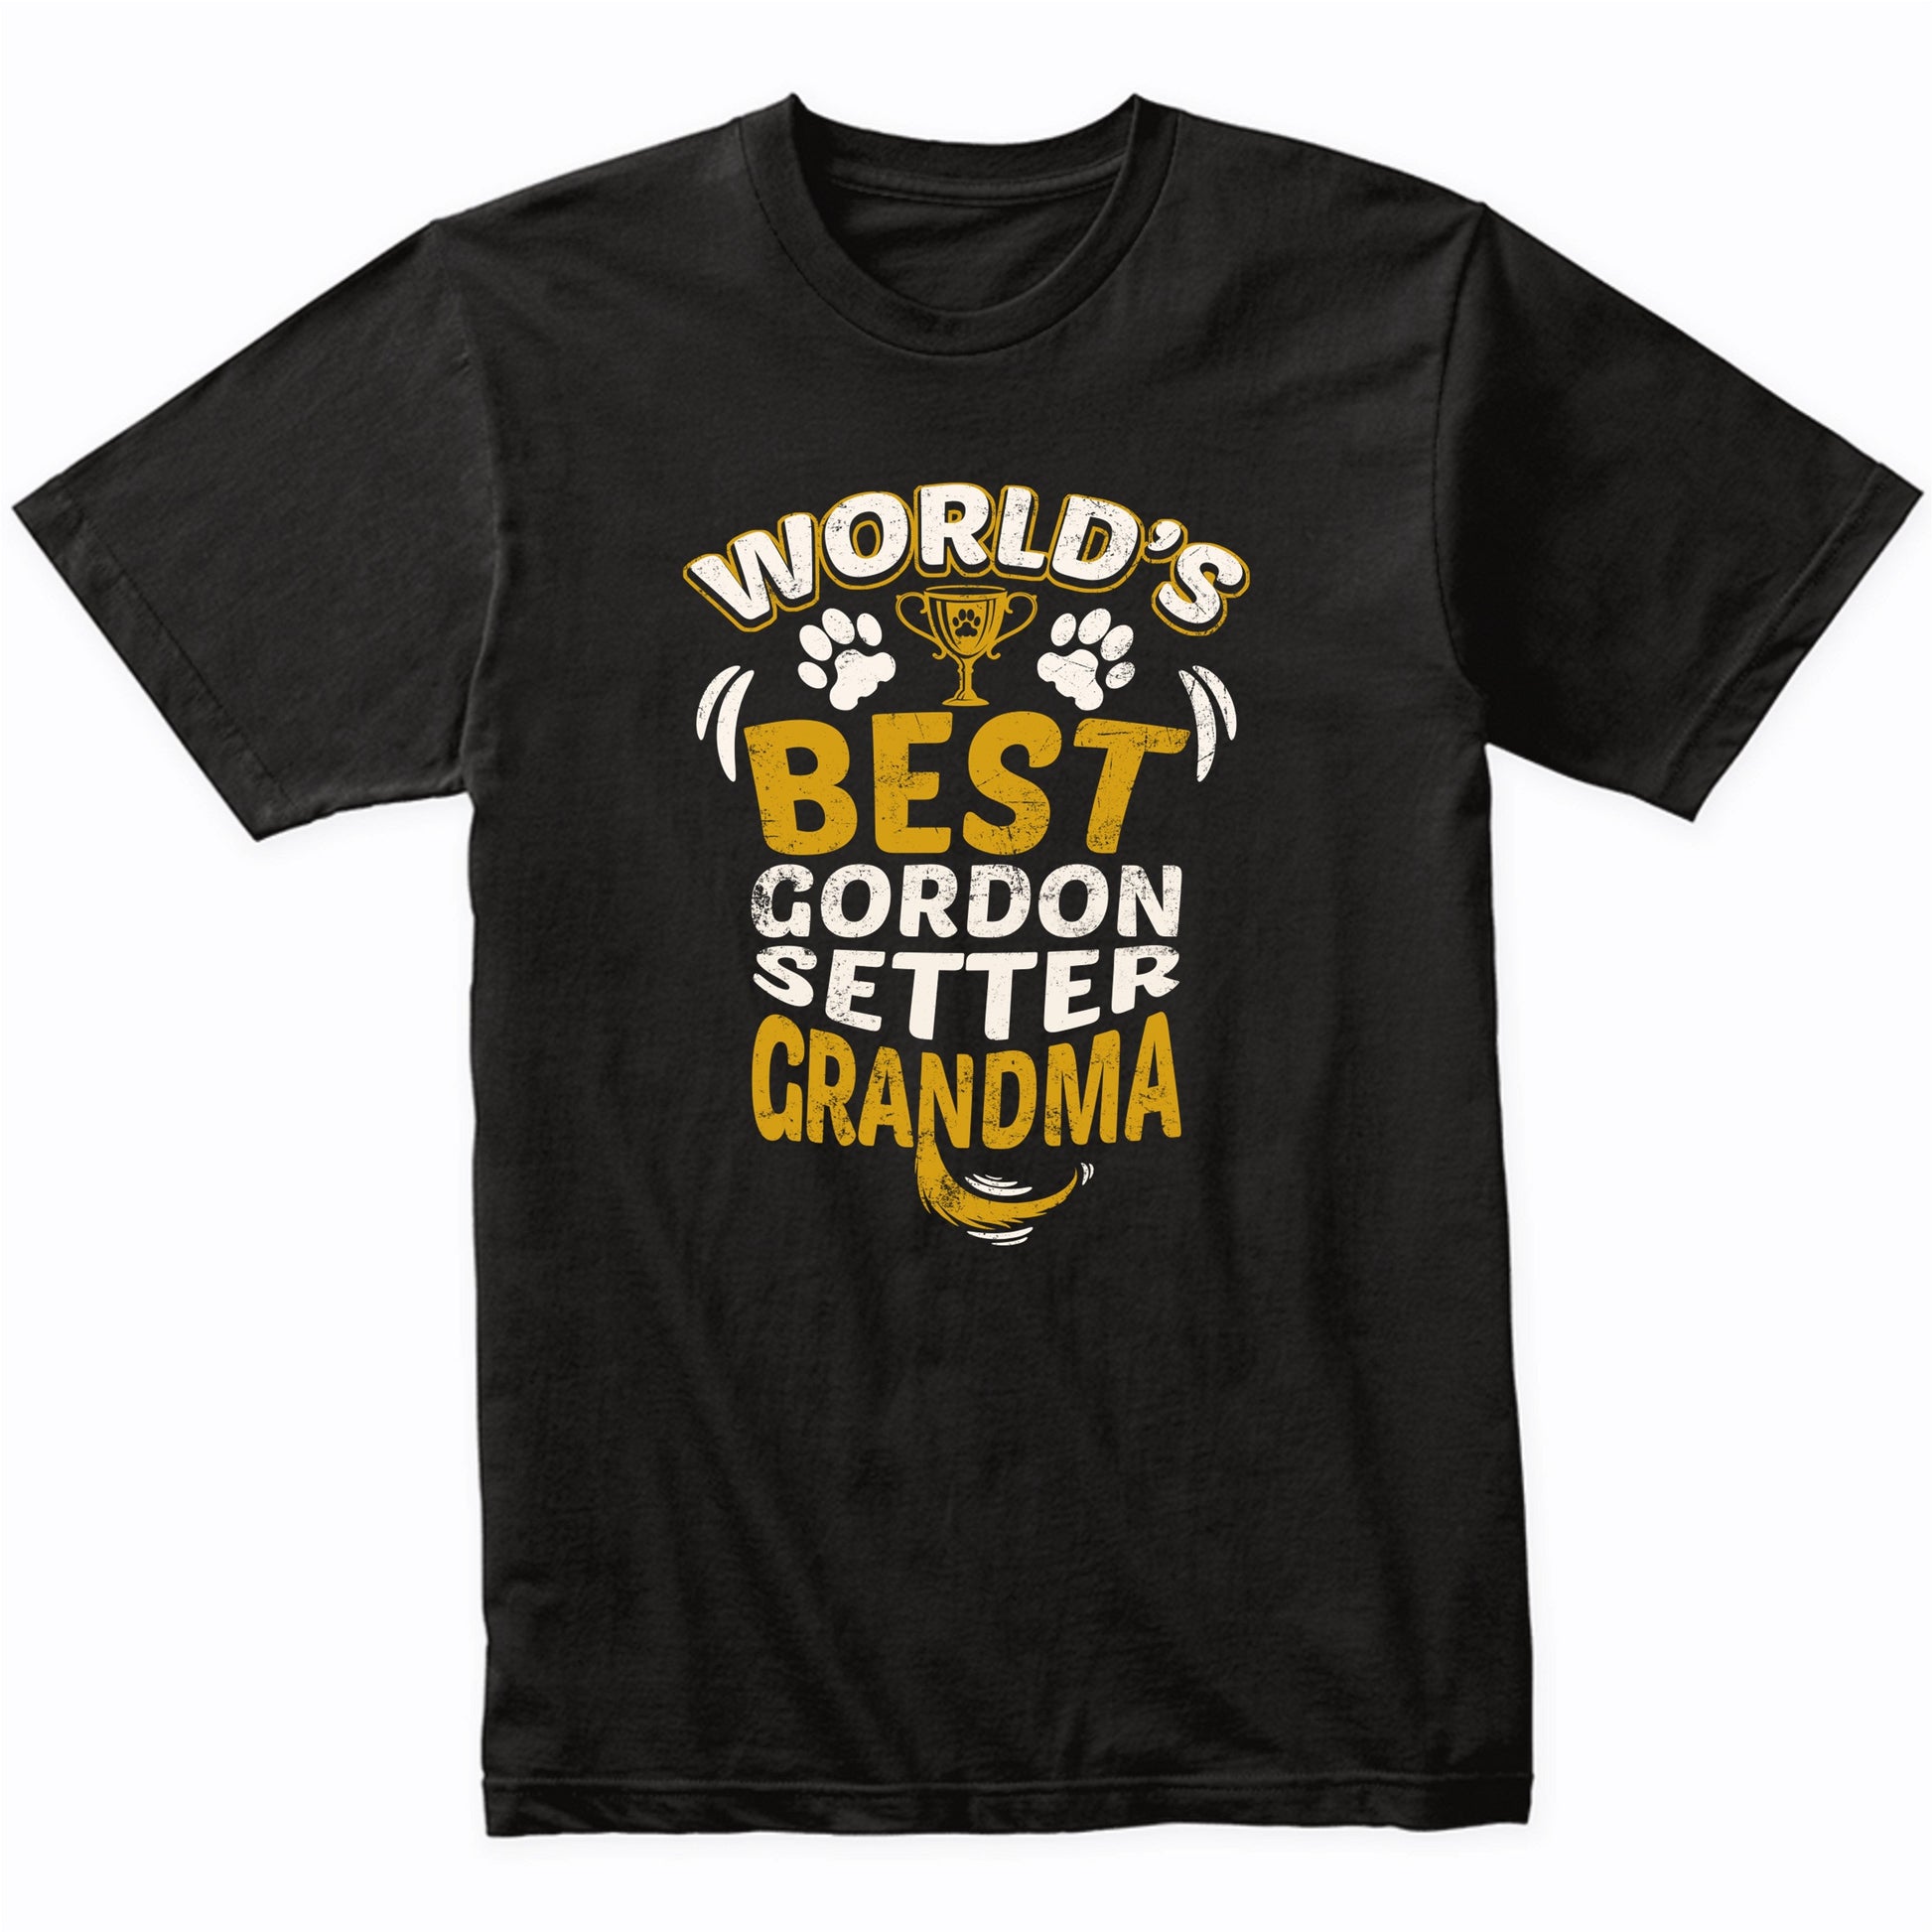 World's Best Gordon Setter Grandma Graphic T-Shirt